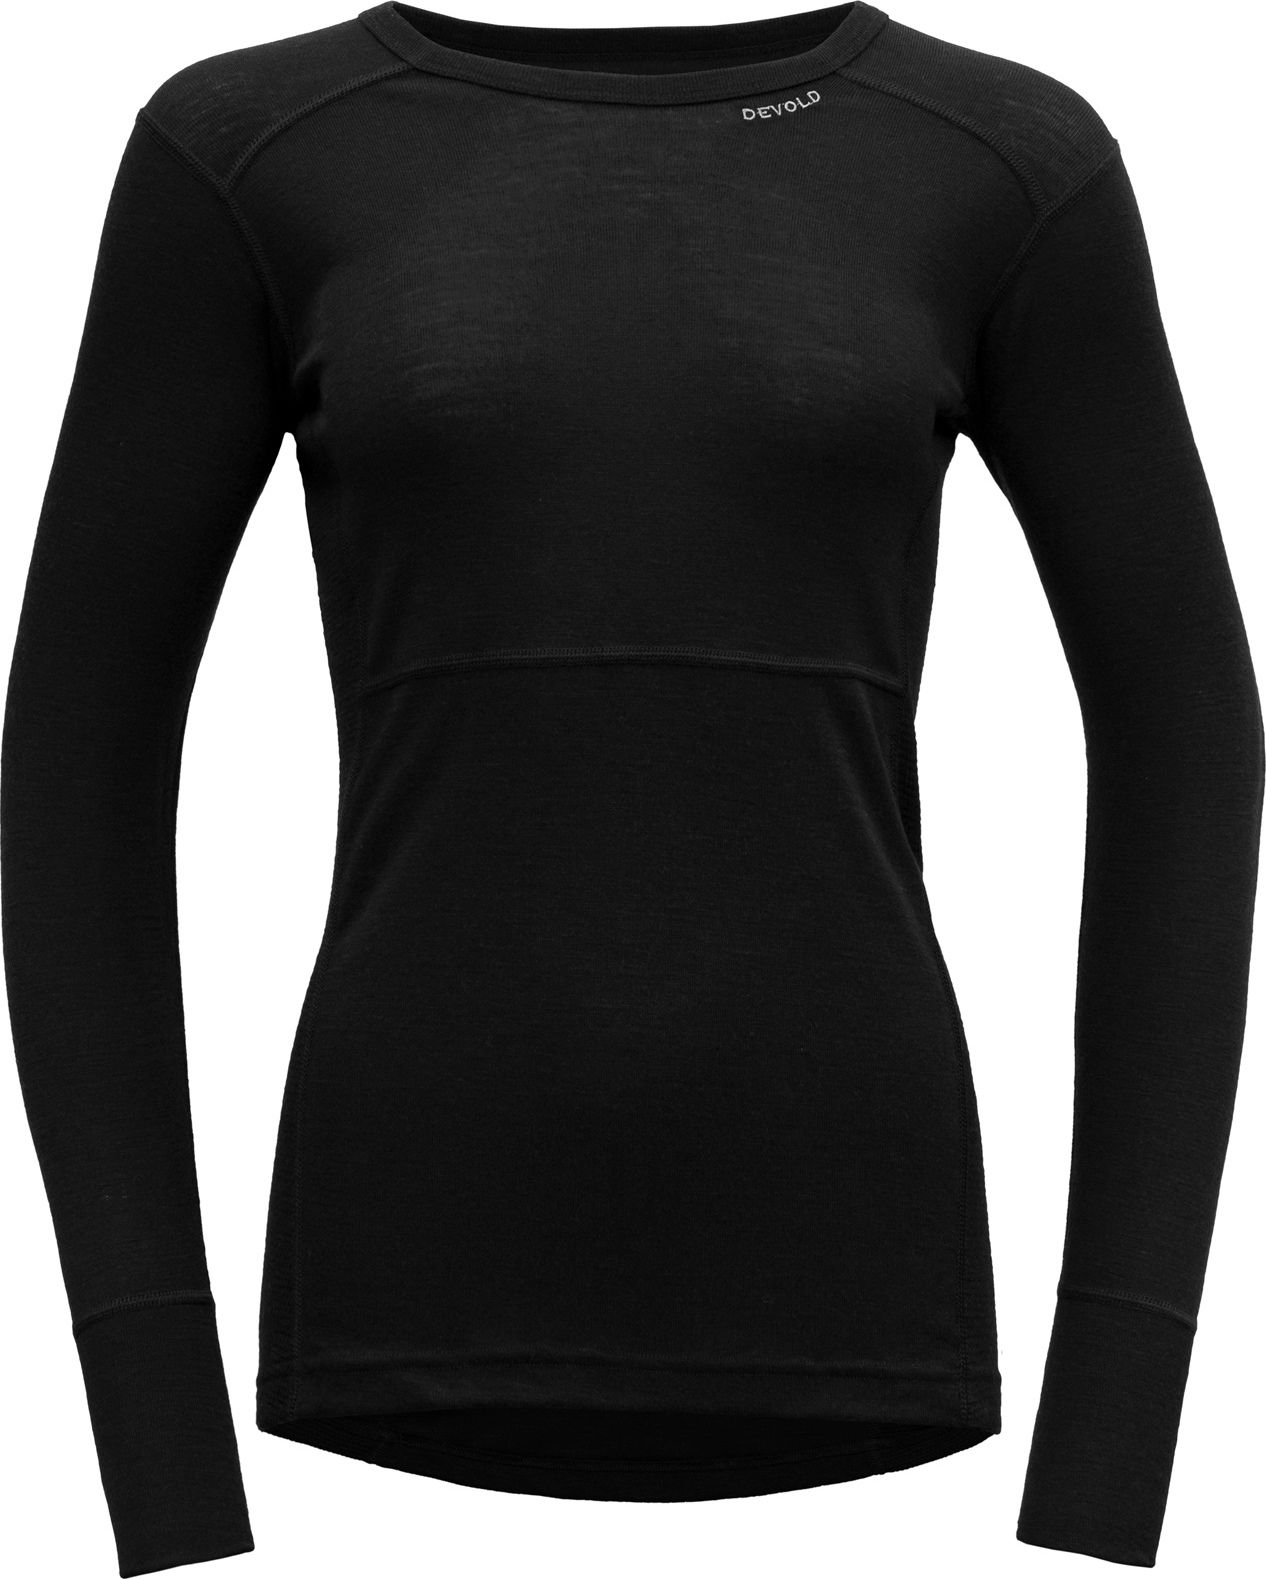 Devold Women's Lauparen Merino 190 Shirt Black